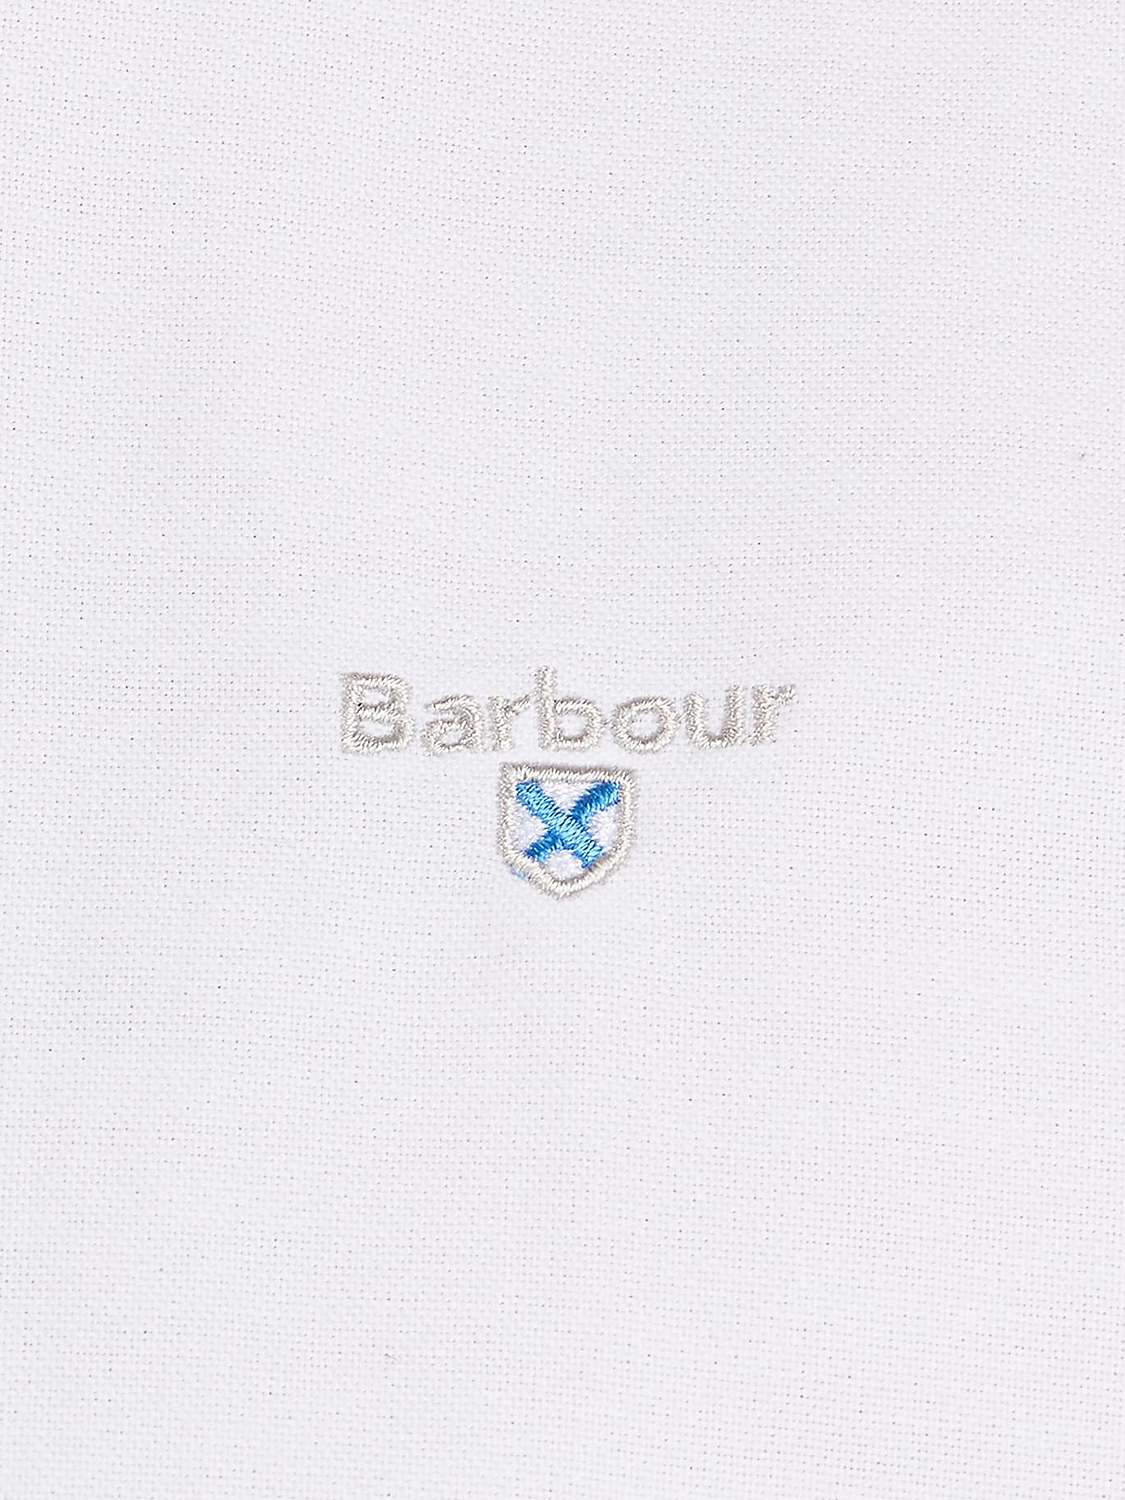 Buy Barbour Short Sleeve Oxford Shirt Online at johnlewis.com